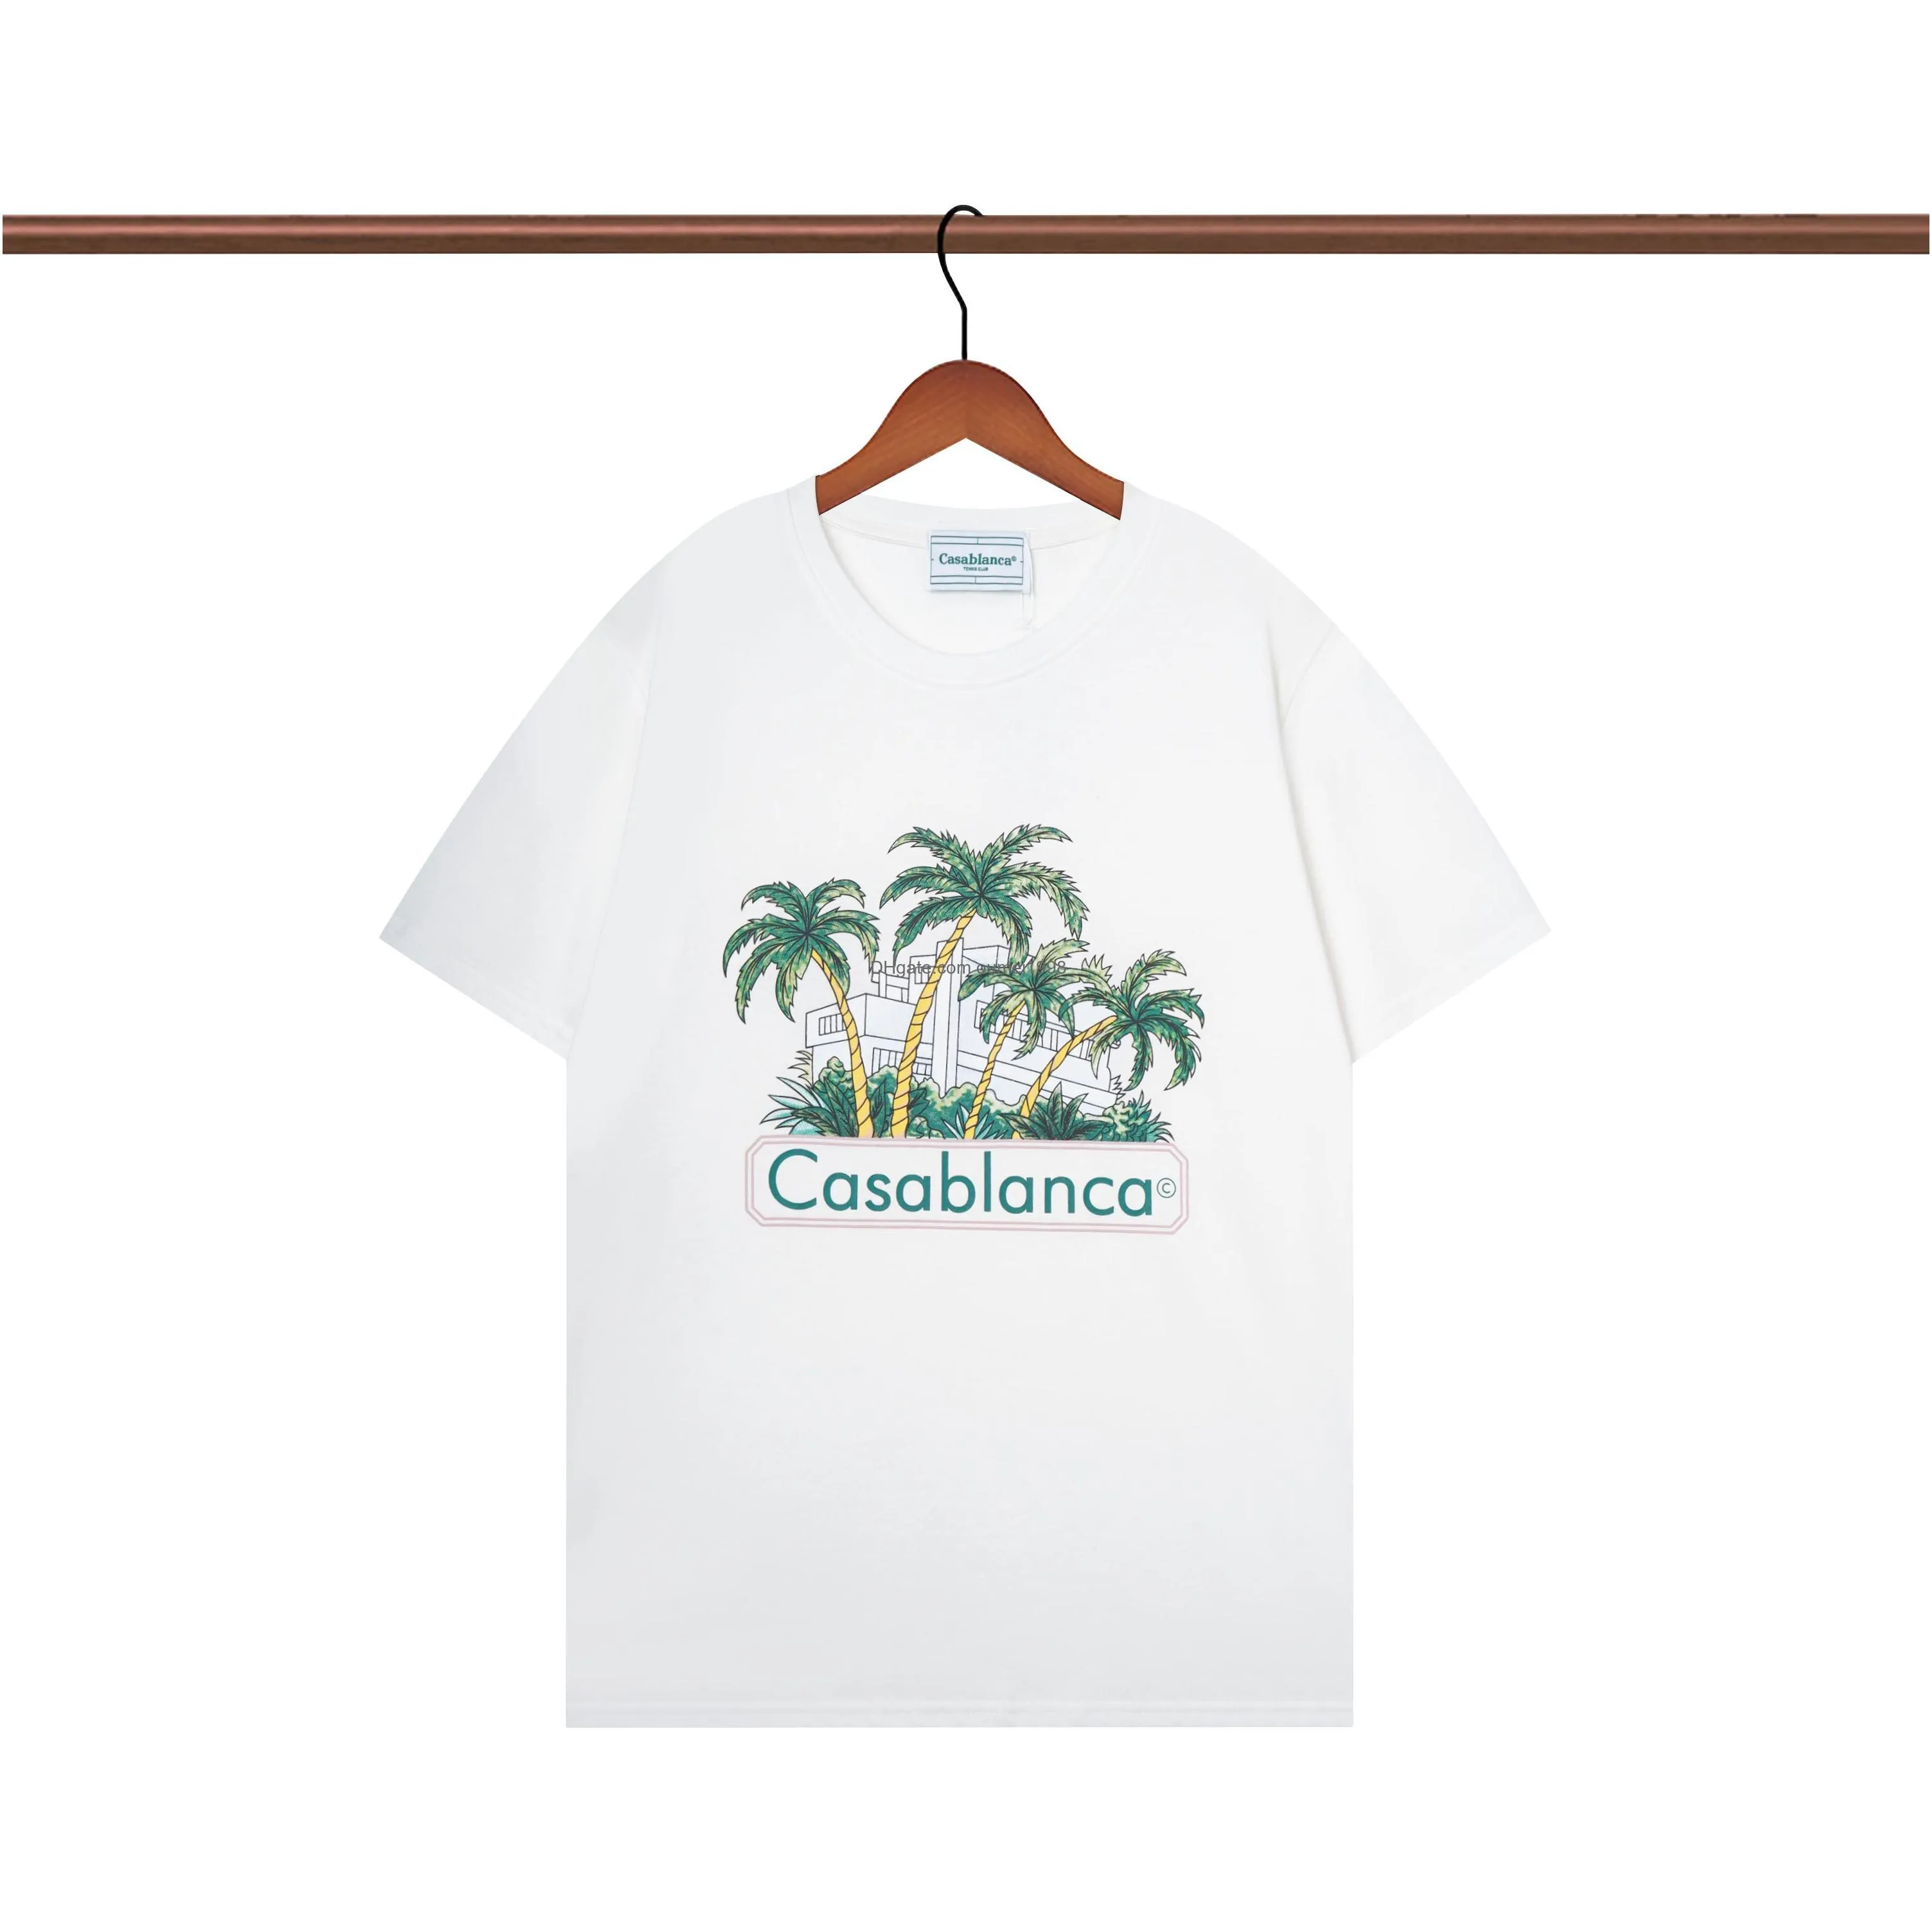 Casablanc shirt Mens T Shirt Designer Cotton Luxury Brand Clothing European American trend Design T-shirts Printer Summer Short Sleeve US size